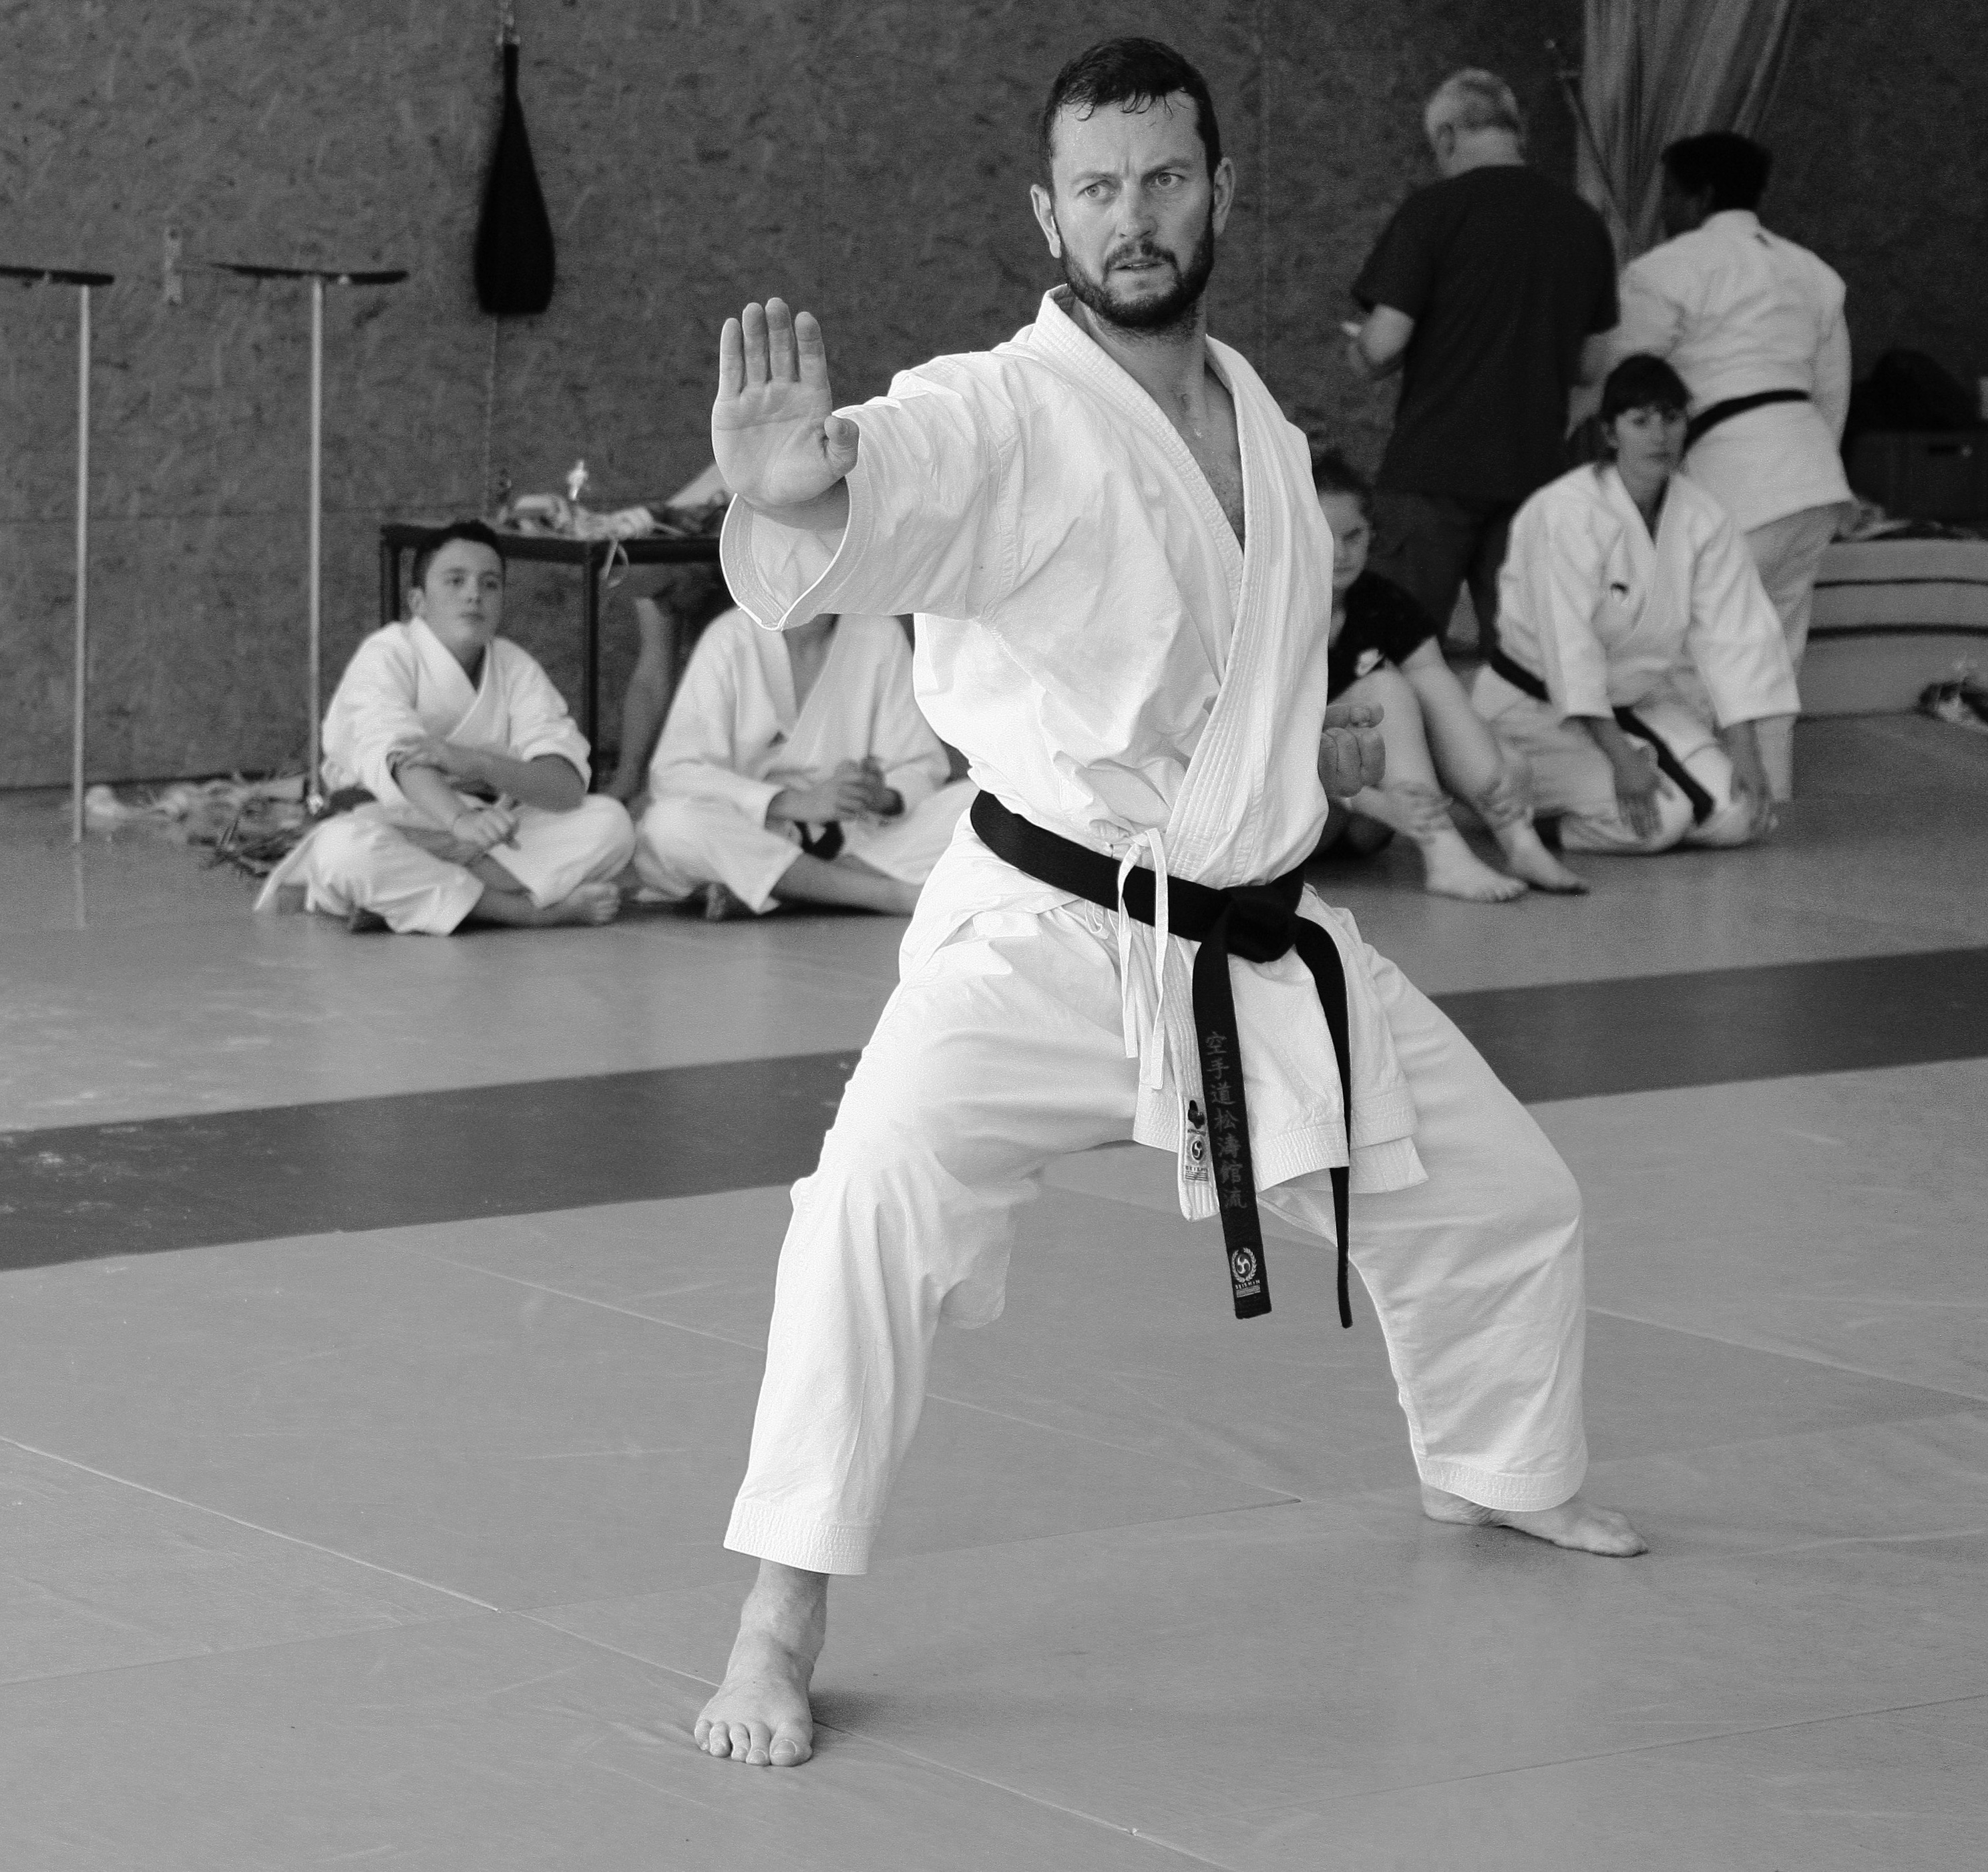 kata 1 karate lemkari Karate kata 1 steps / karate the complete kata